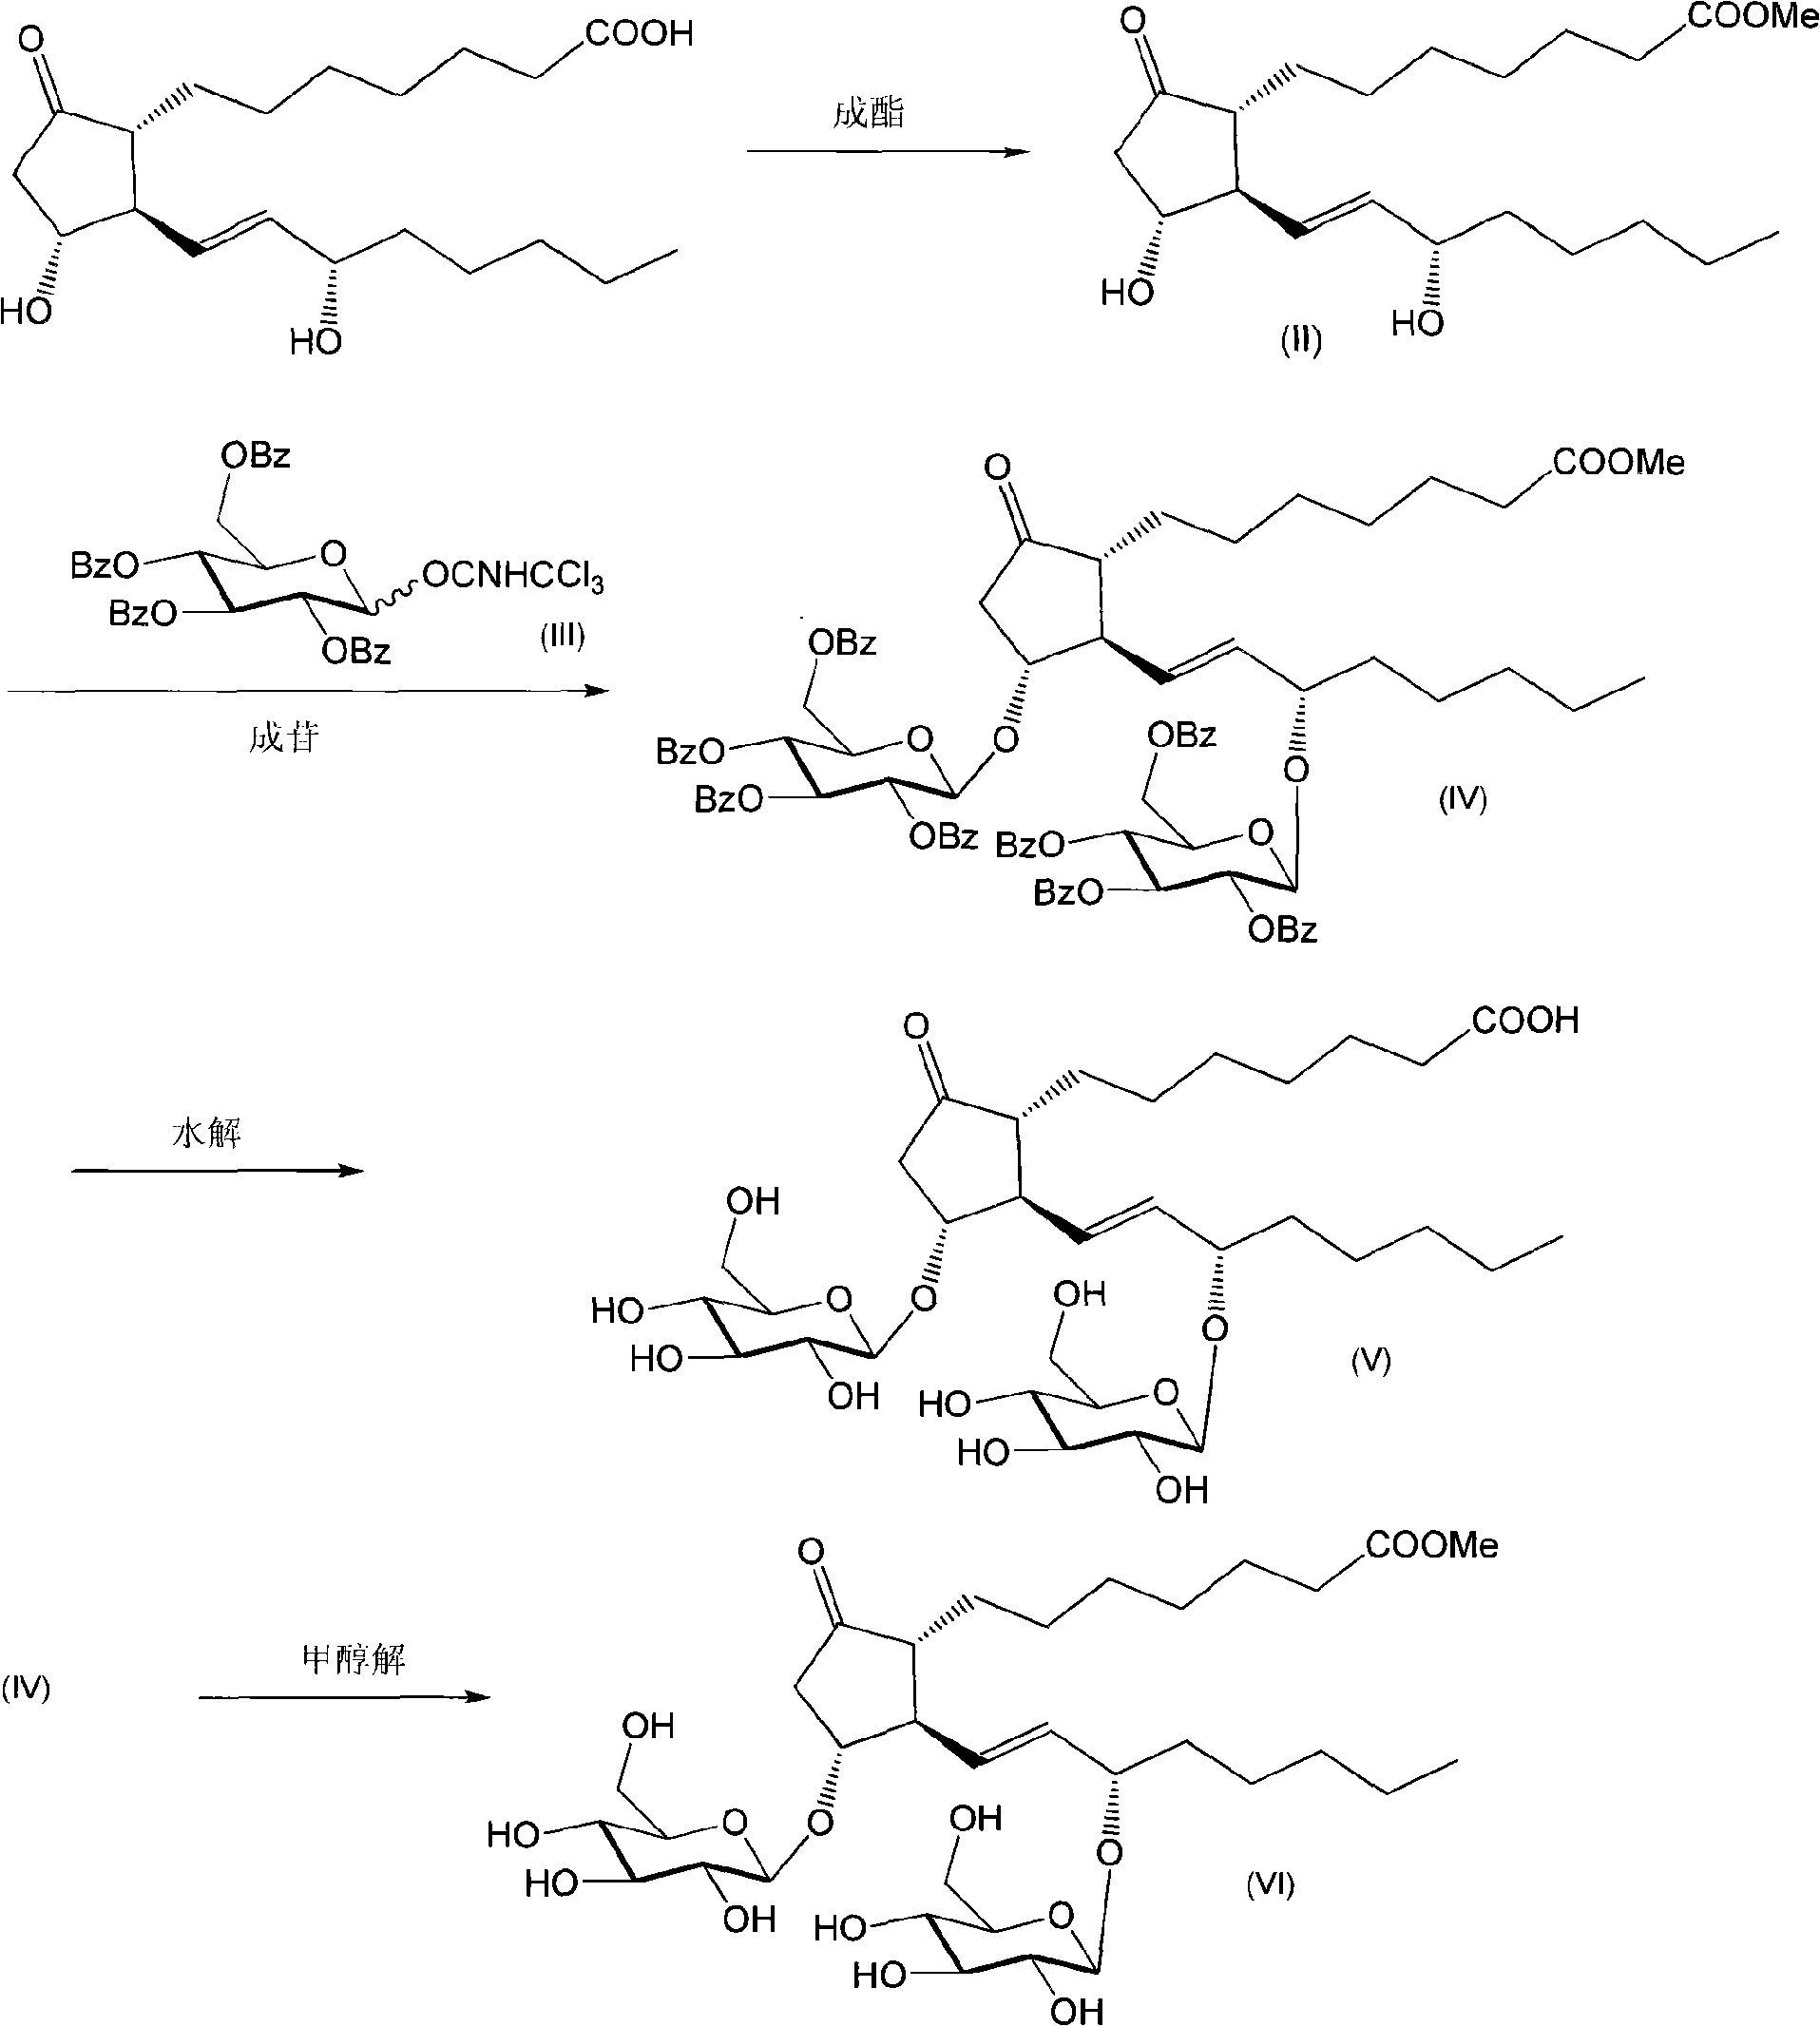 Glycosides derivative of prostaglandin E1 and preparation method thereof